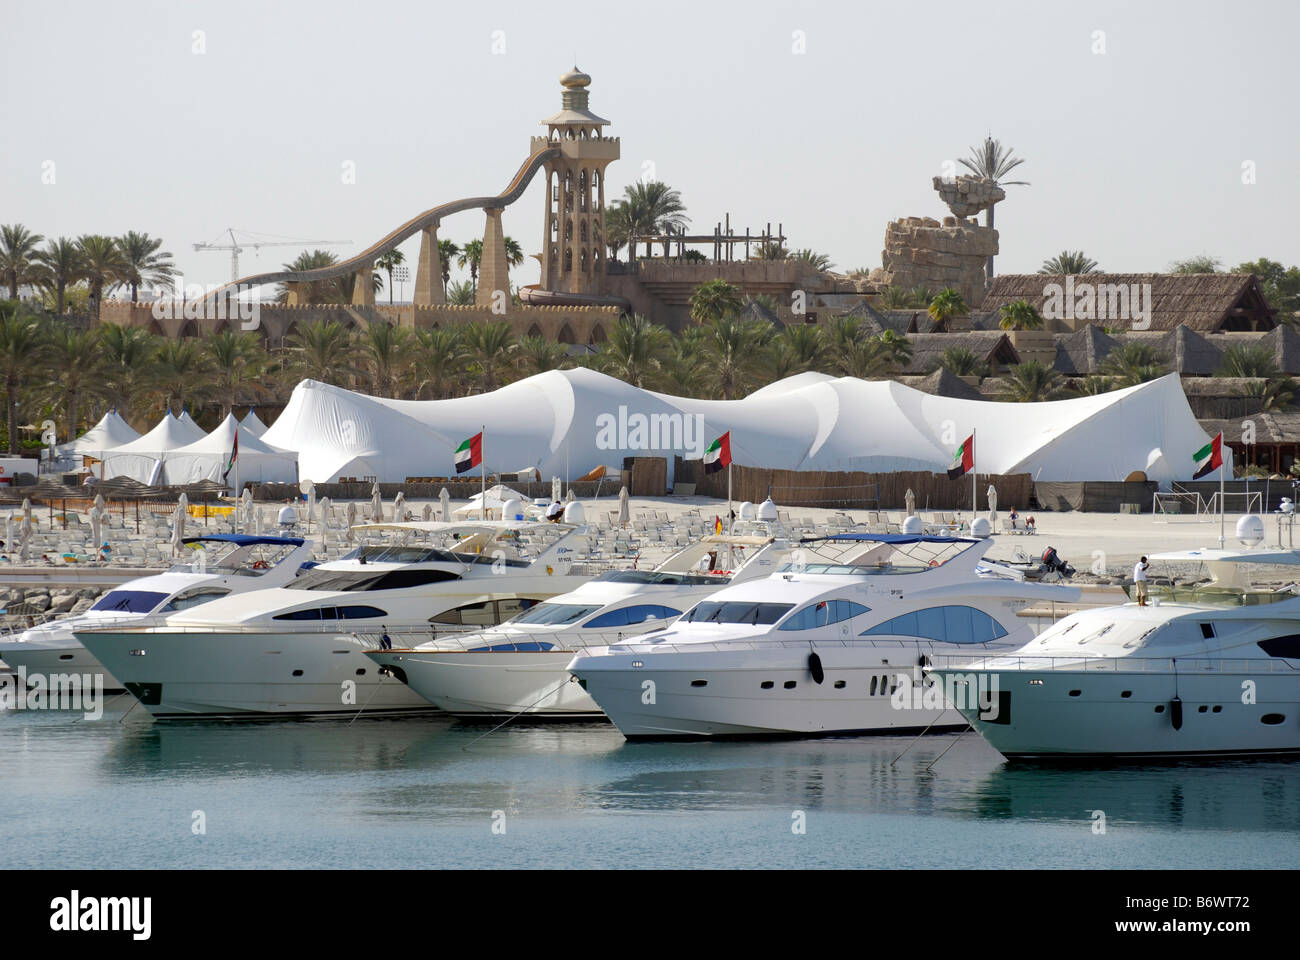 Motoryacht di lusso Jumeirah Beach marina dubai enorme marquee & enorme scivolo d'acqua in background Foto Stock